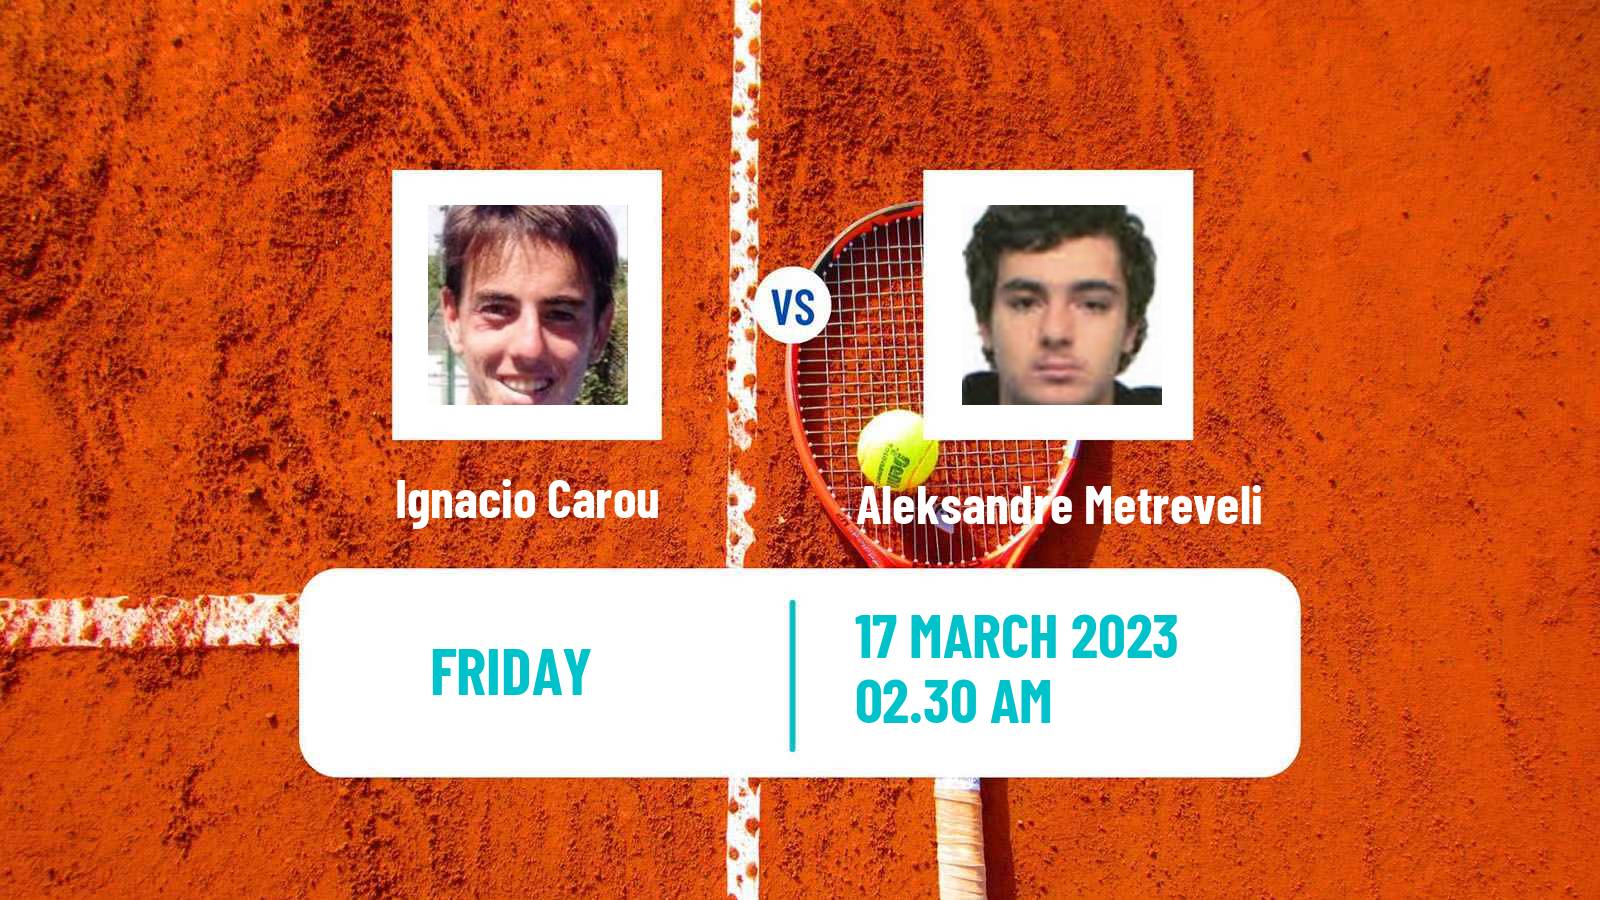 Tennis ITF Tournaments Ignacio Carou - Aleksandre Metreveli